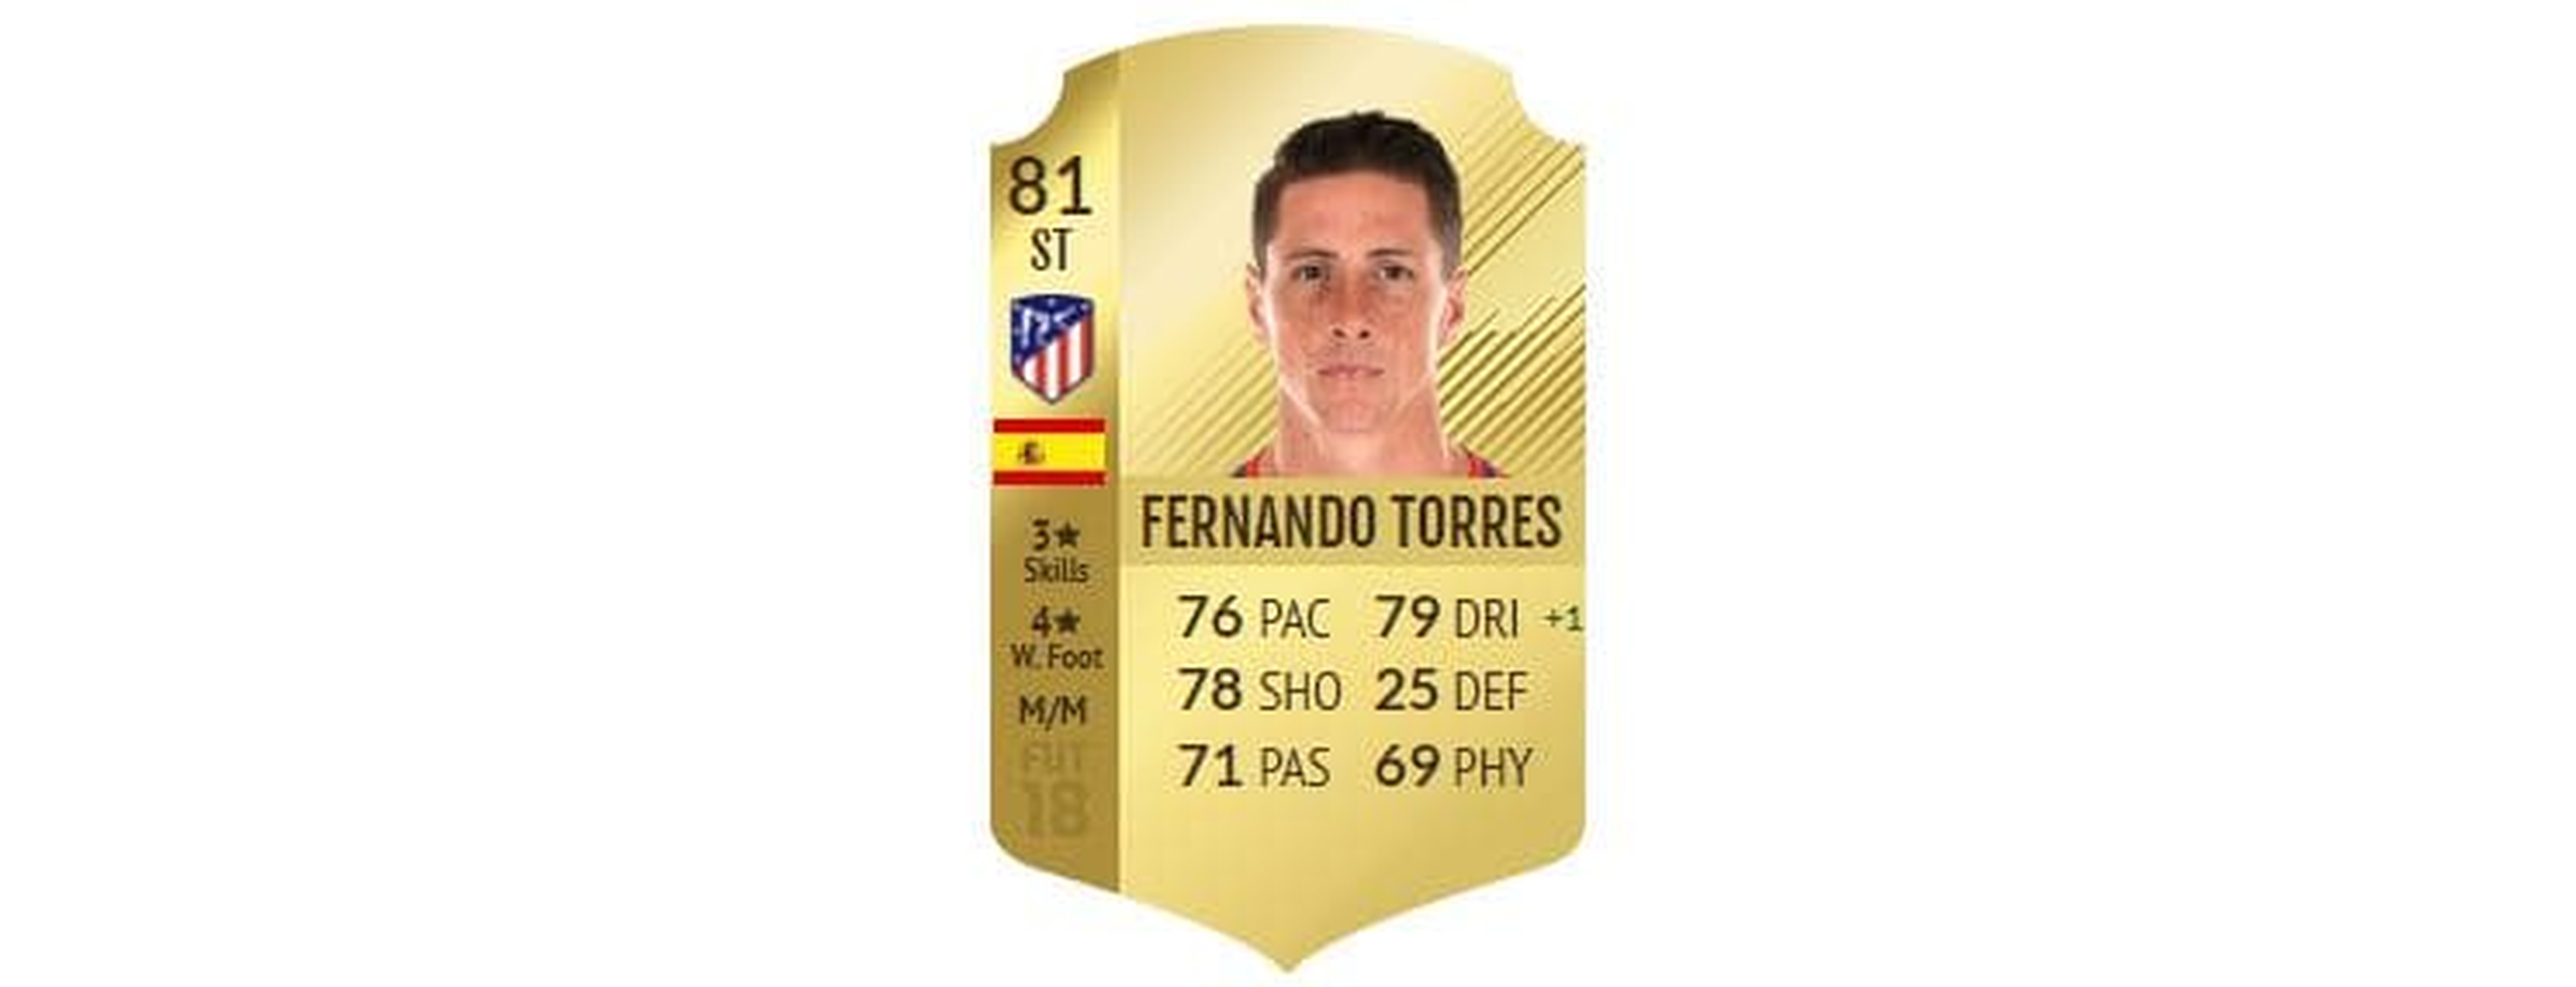 FIFA 18 - Fernando Torres